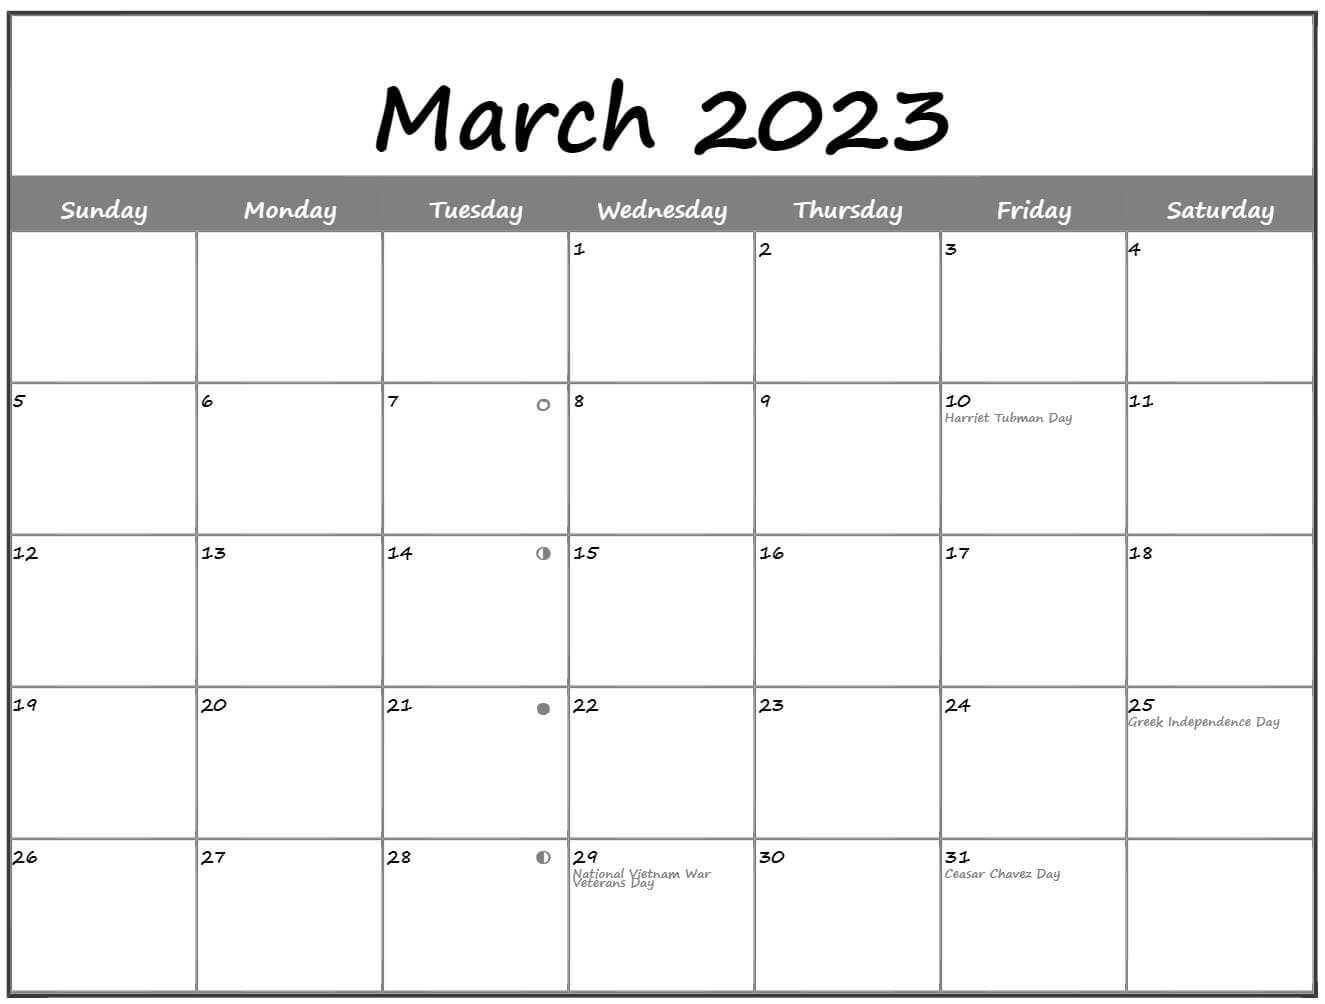 March 2023 calendar moon